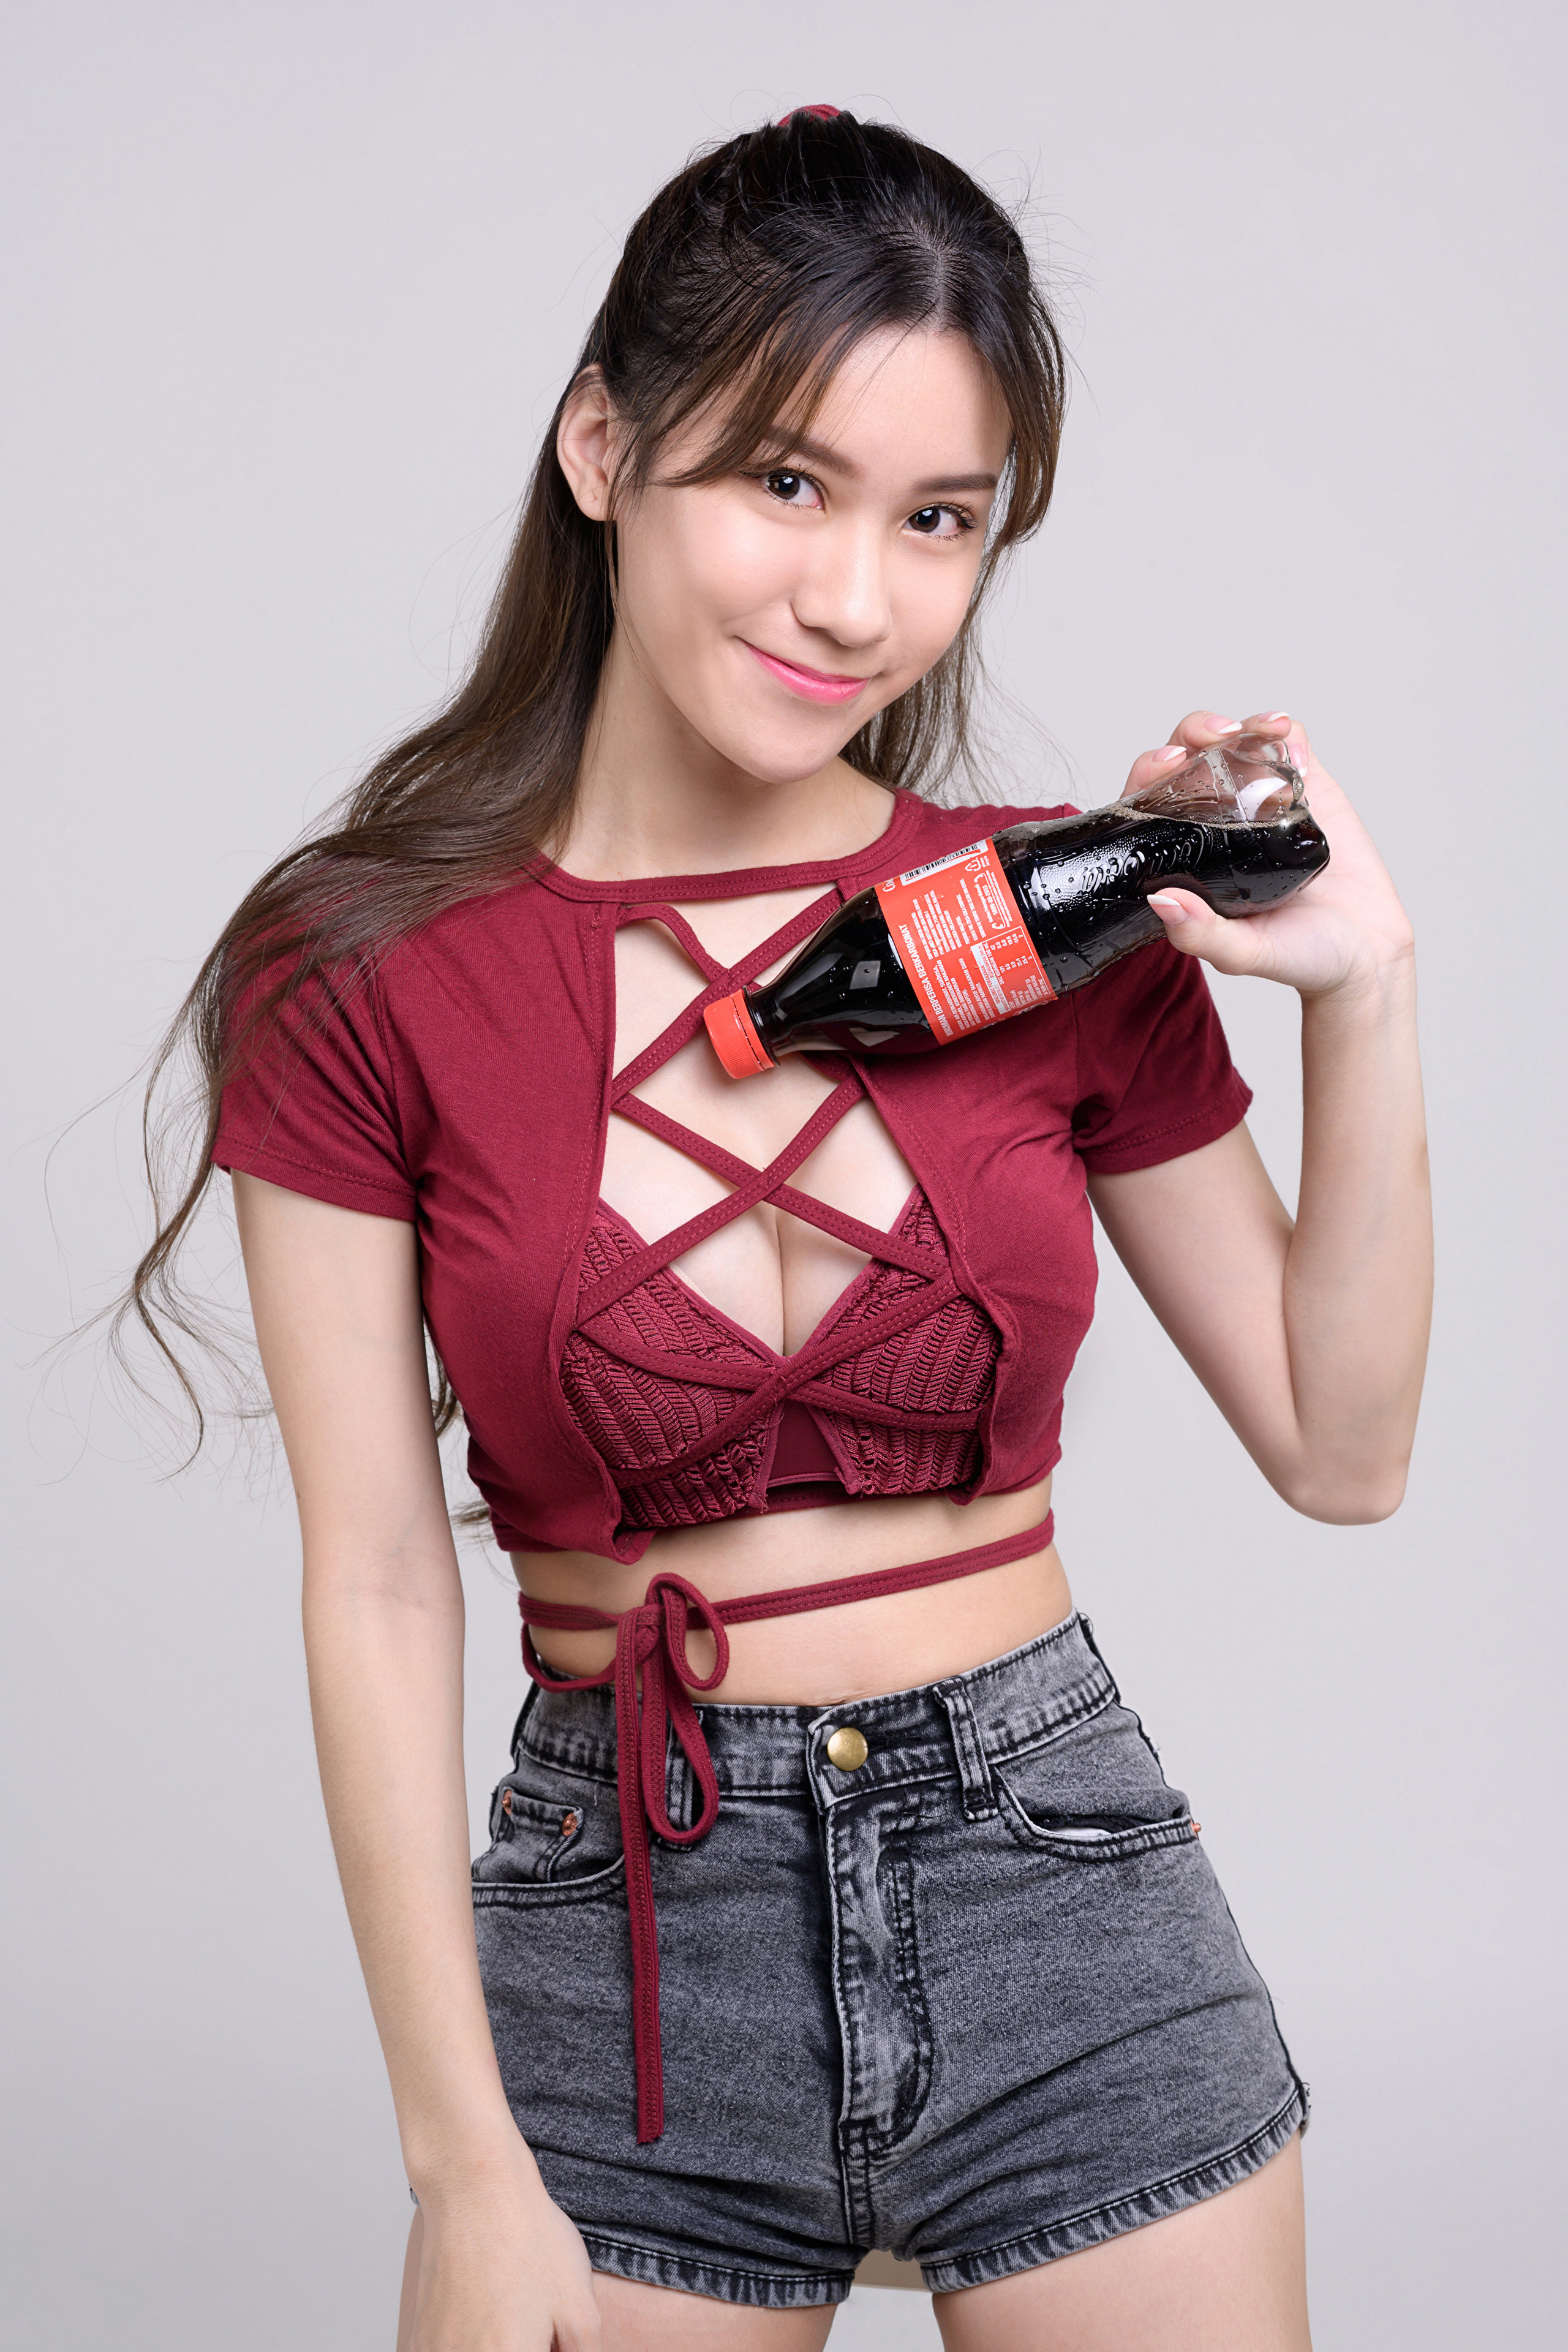 Asian Model Women Long Hair Dark Hair Short Tops Coca Cola Bottles Ponytail Studio Women Indoors Smi 2560x3840